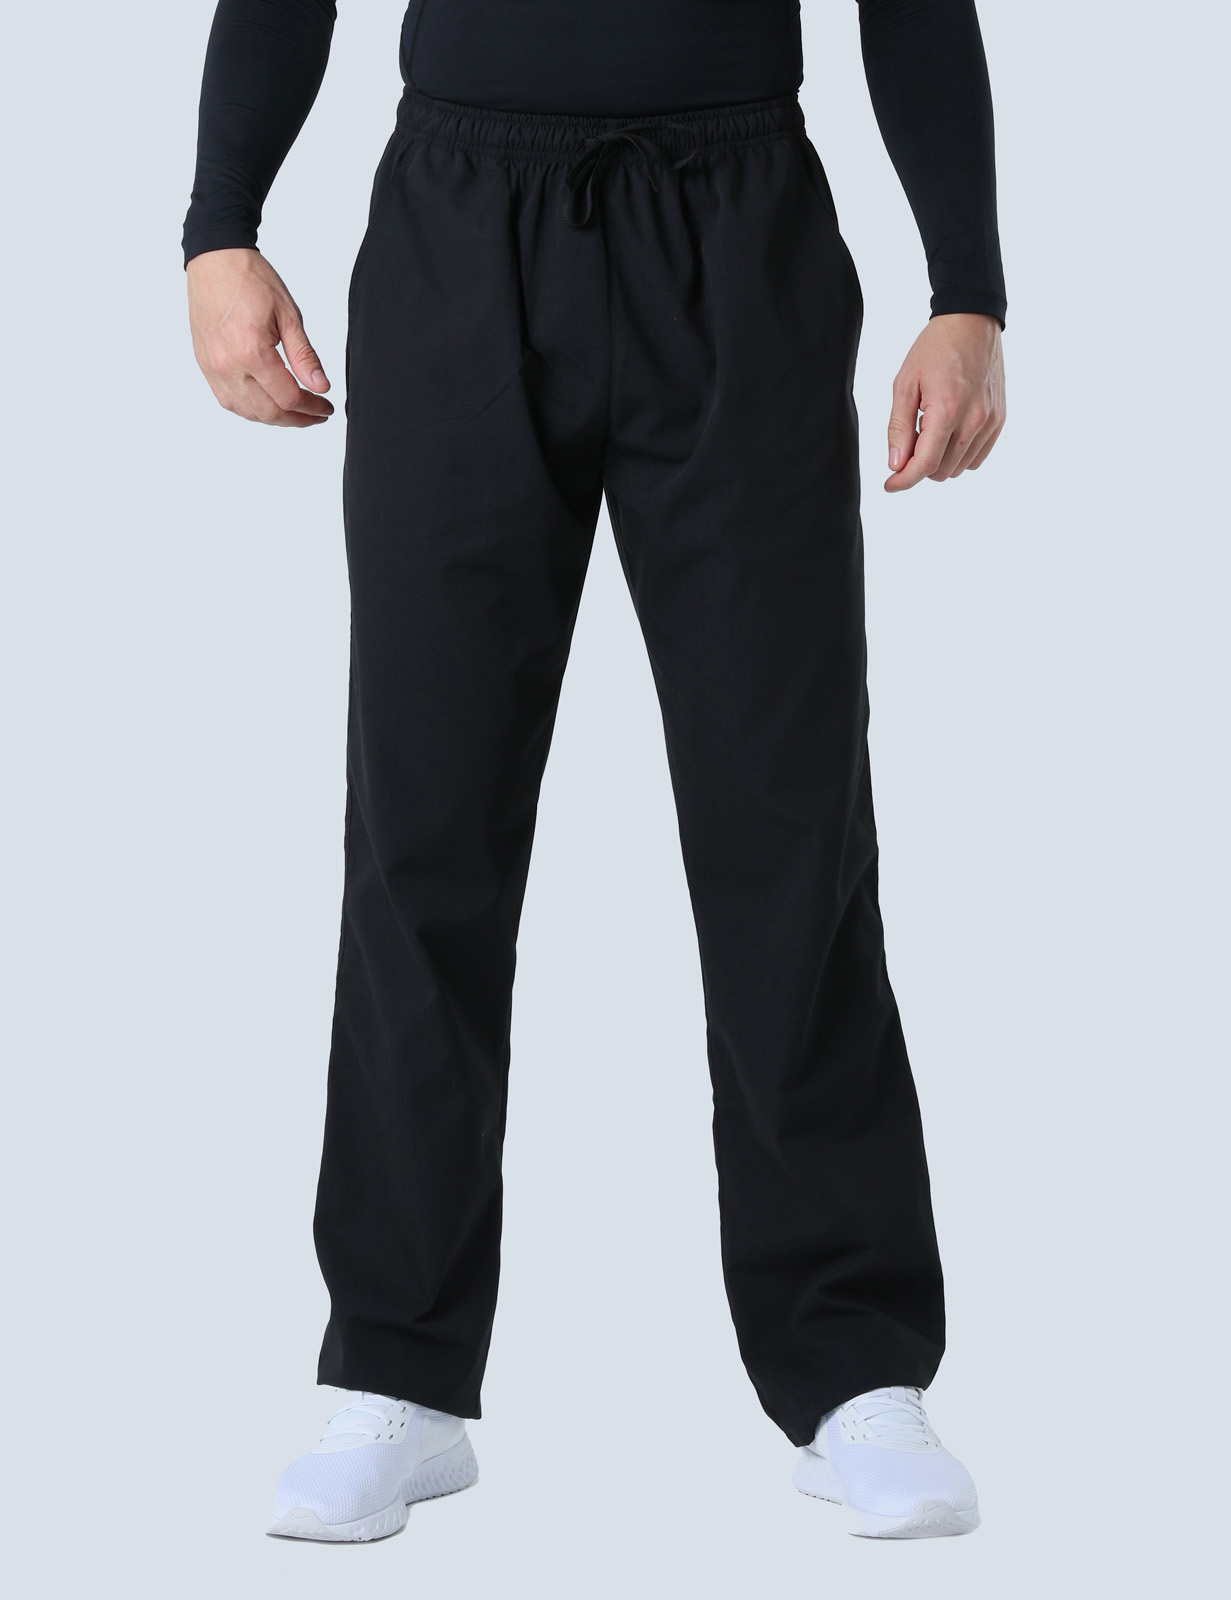 Men's Regular Cut Pants - Black - Medium